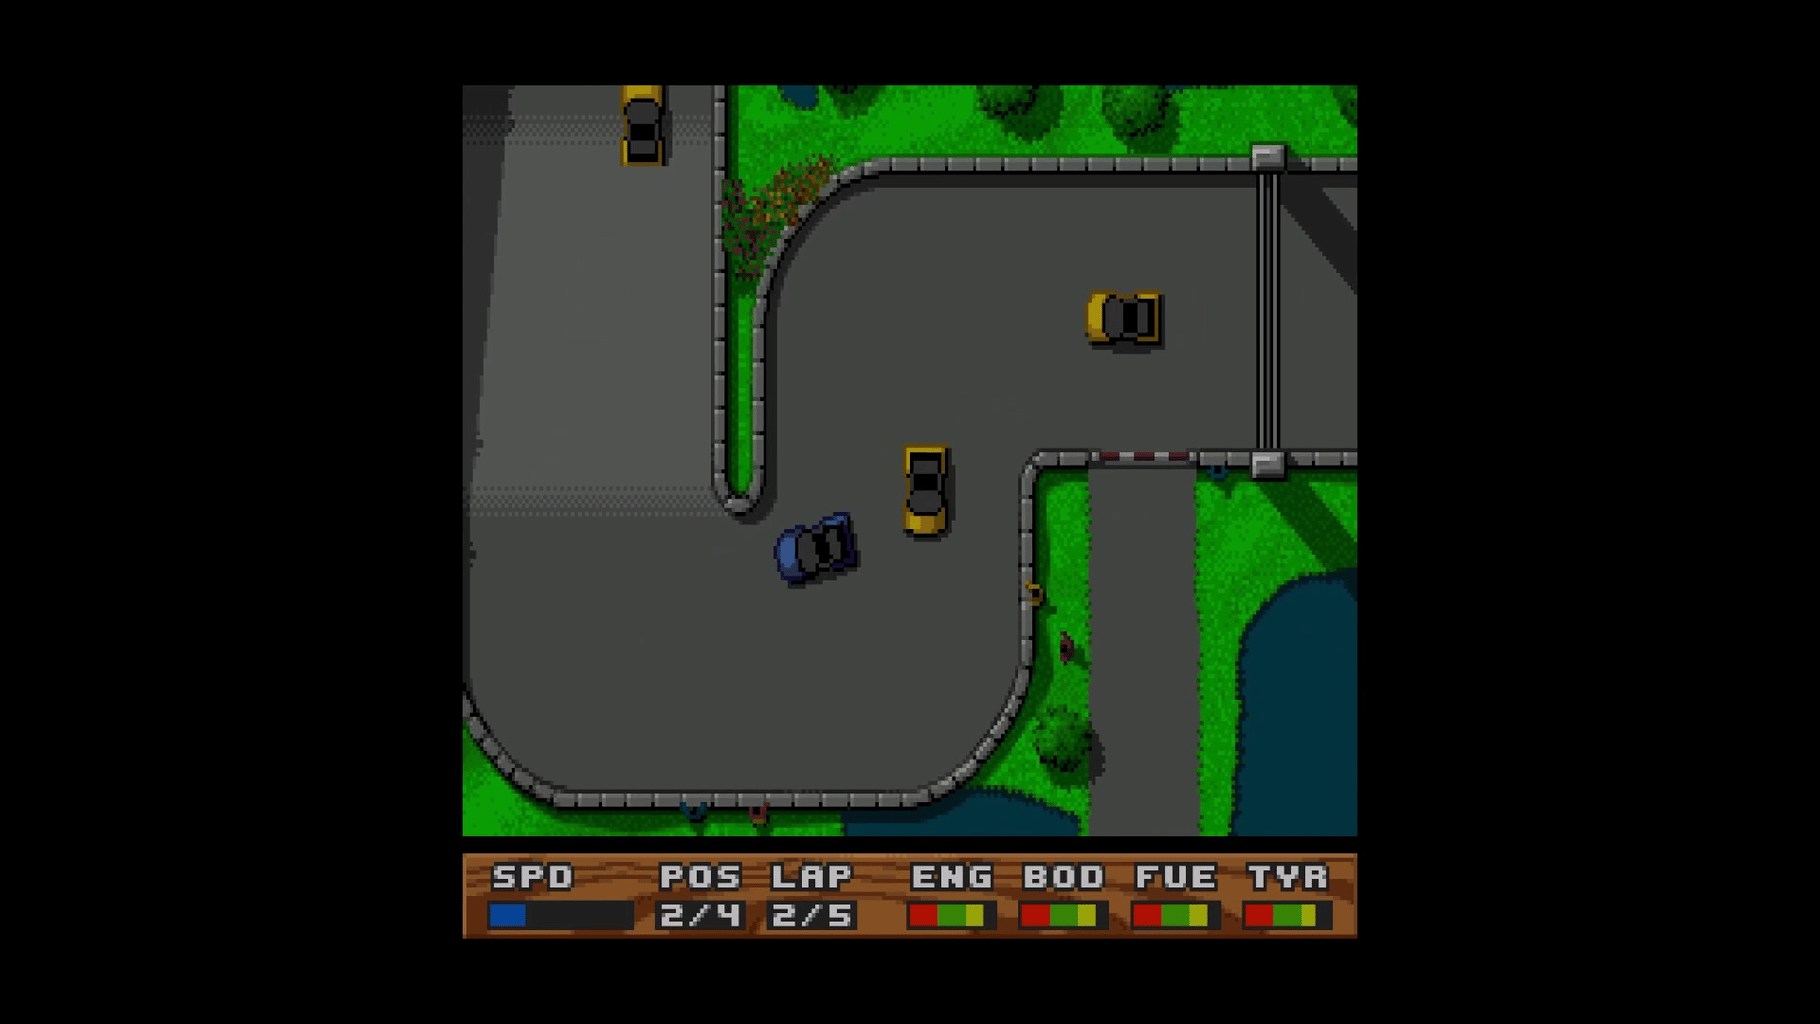 Super Cars screenshot